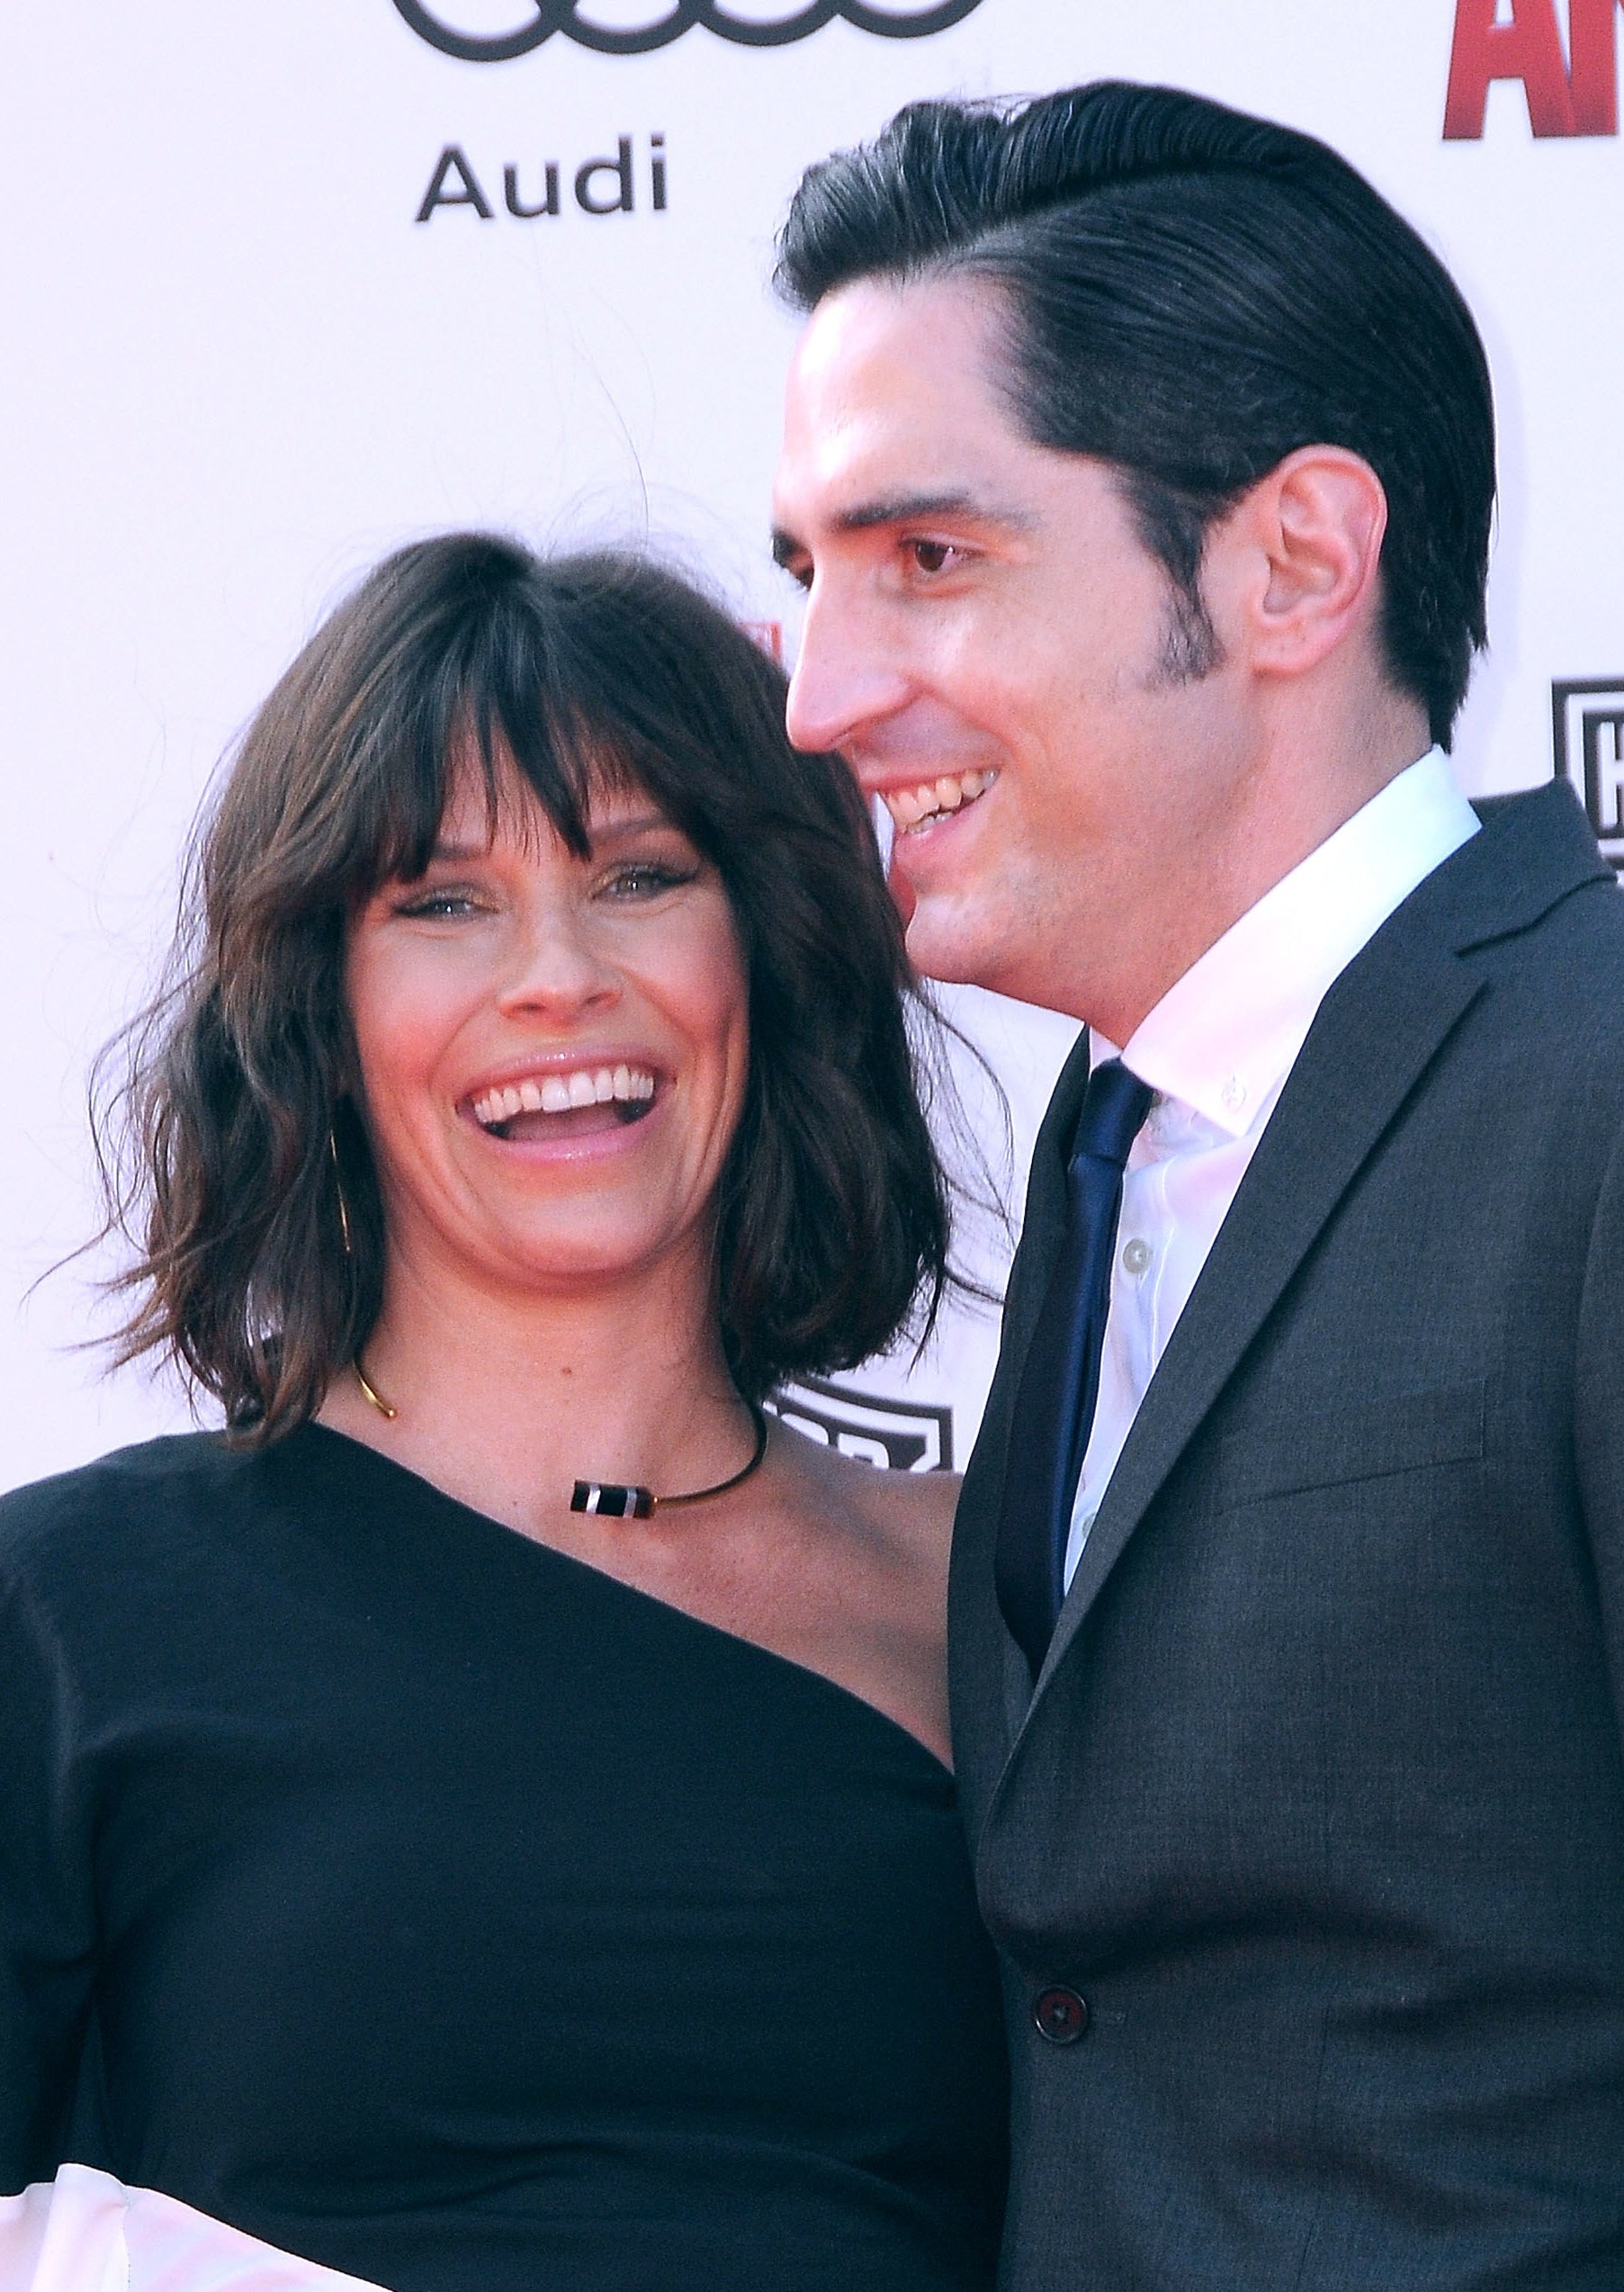 David and Evangeline smiling together at a red carpet event